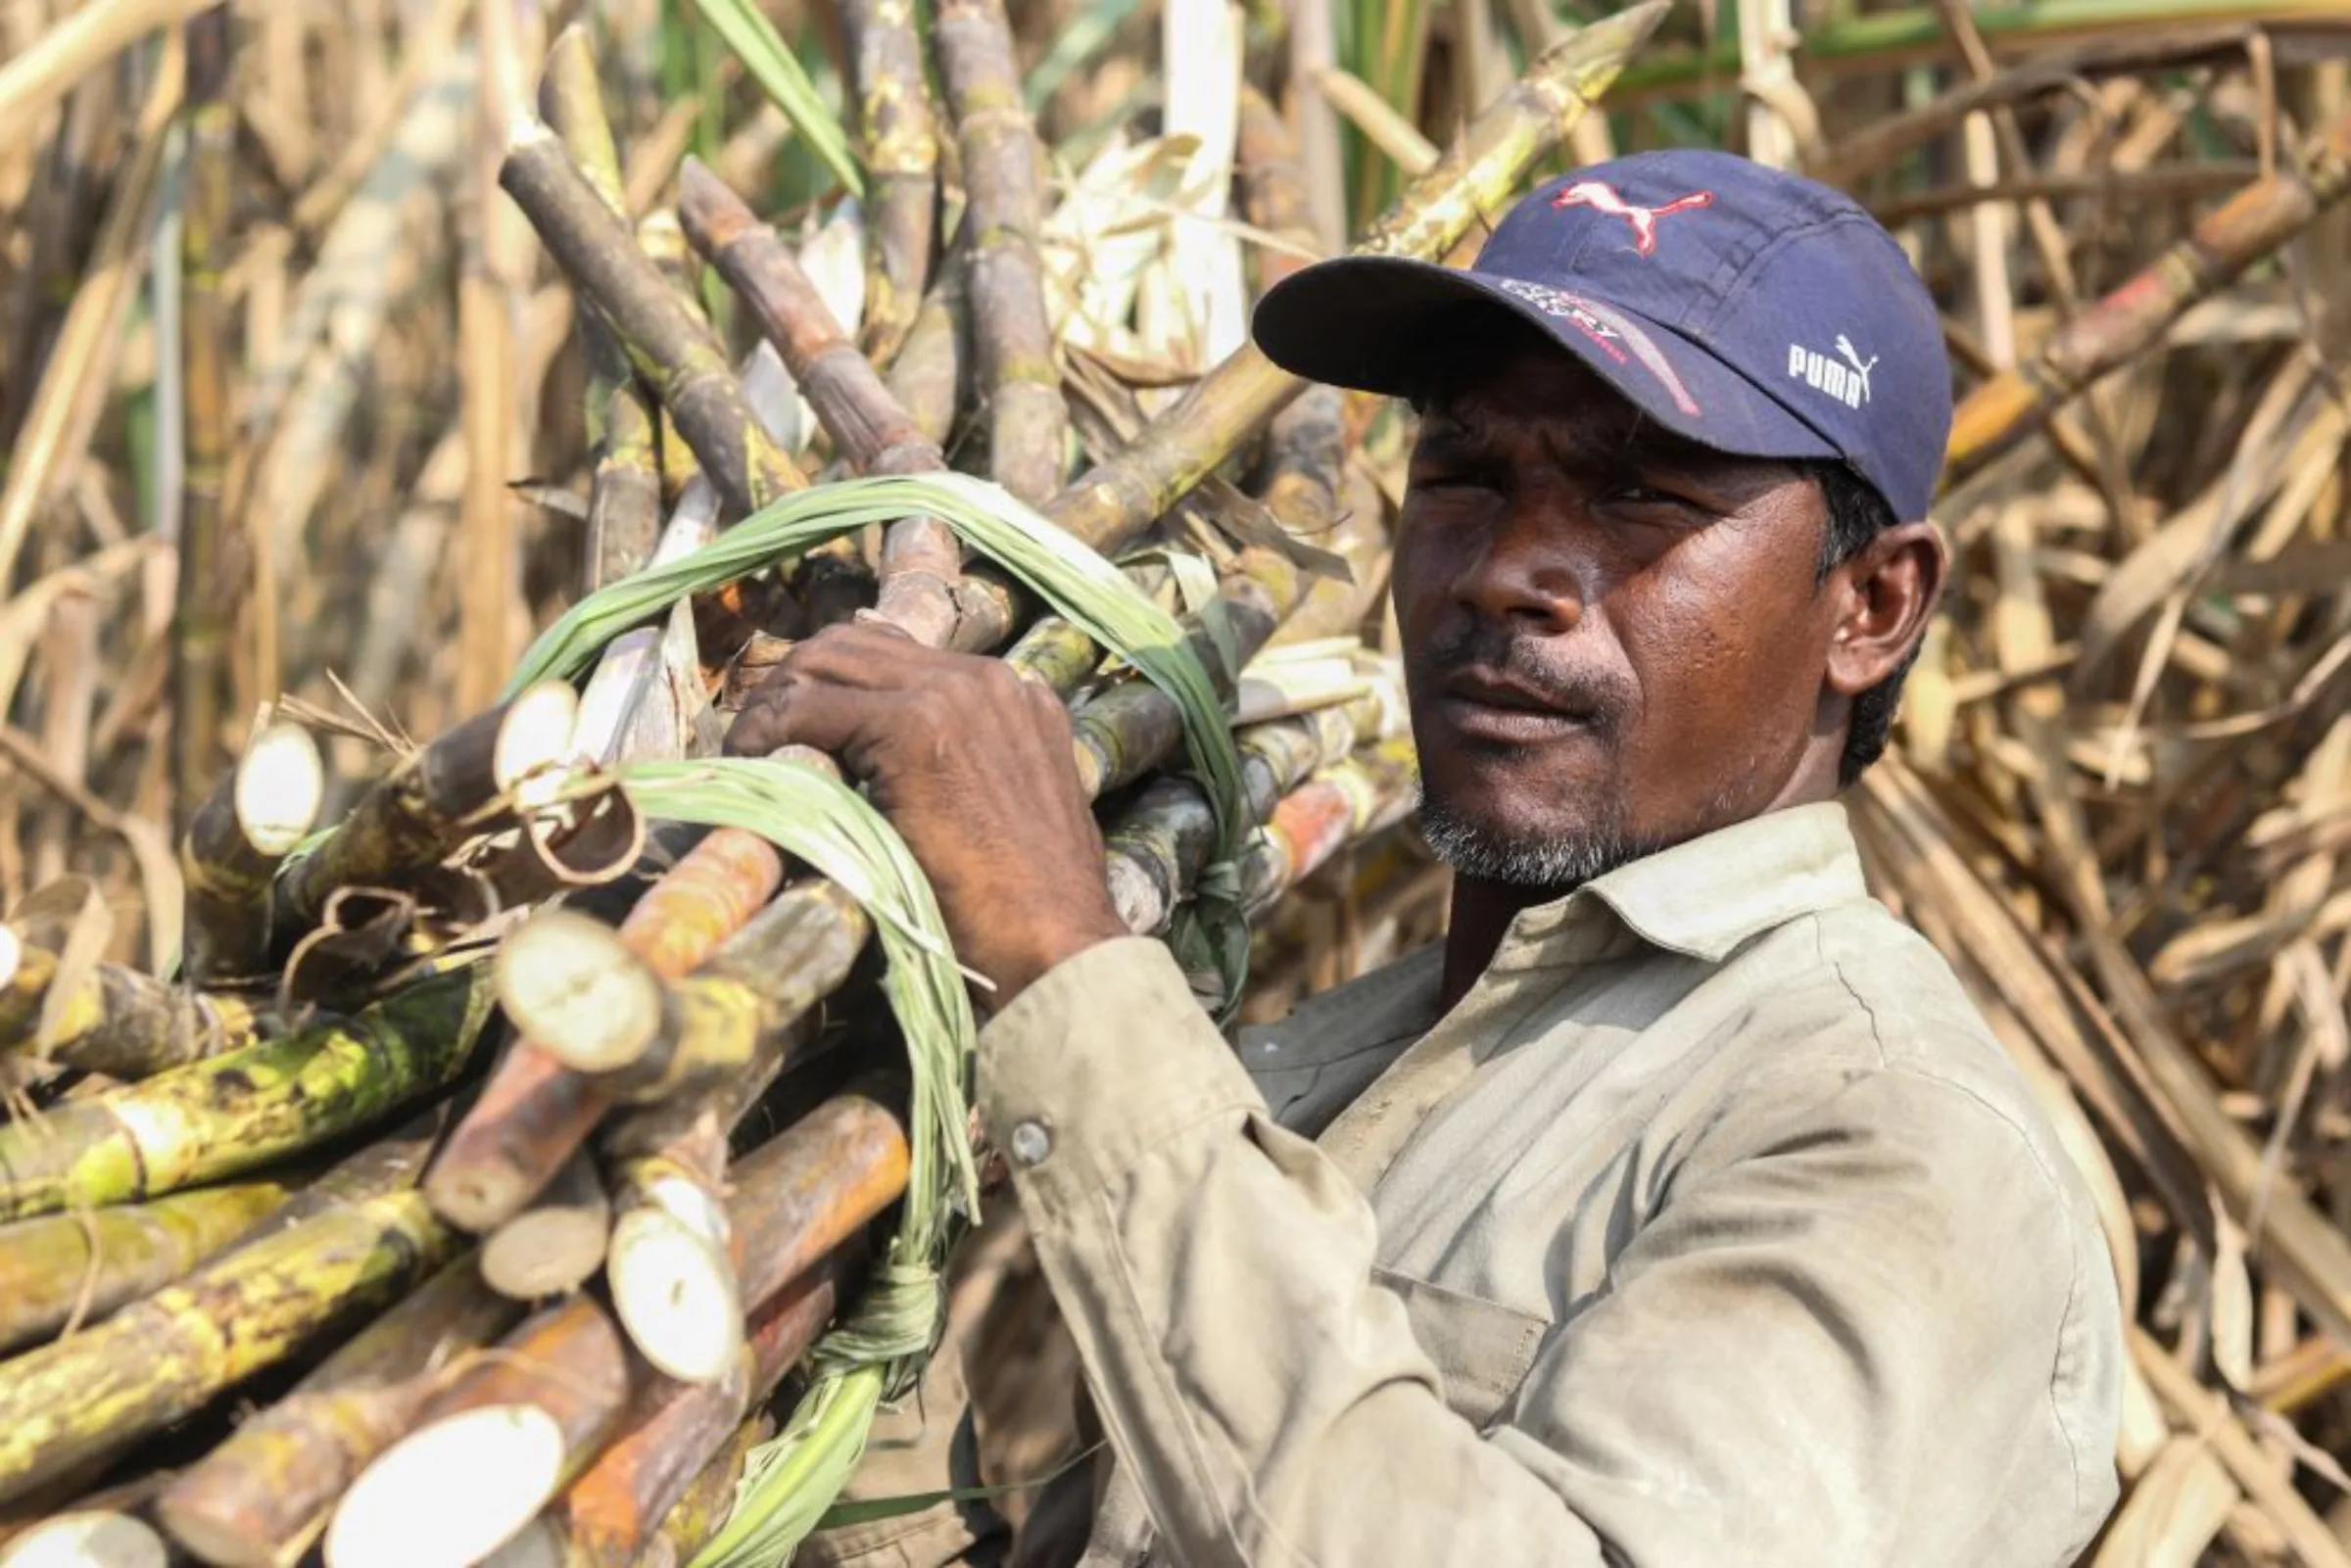 Dagdu Bhil carries sugarcane he cut at a farm in Maharashtra’s Khochi village, India. December 17, 2022